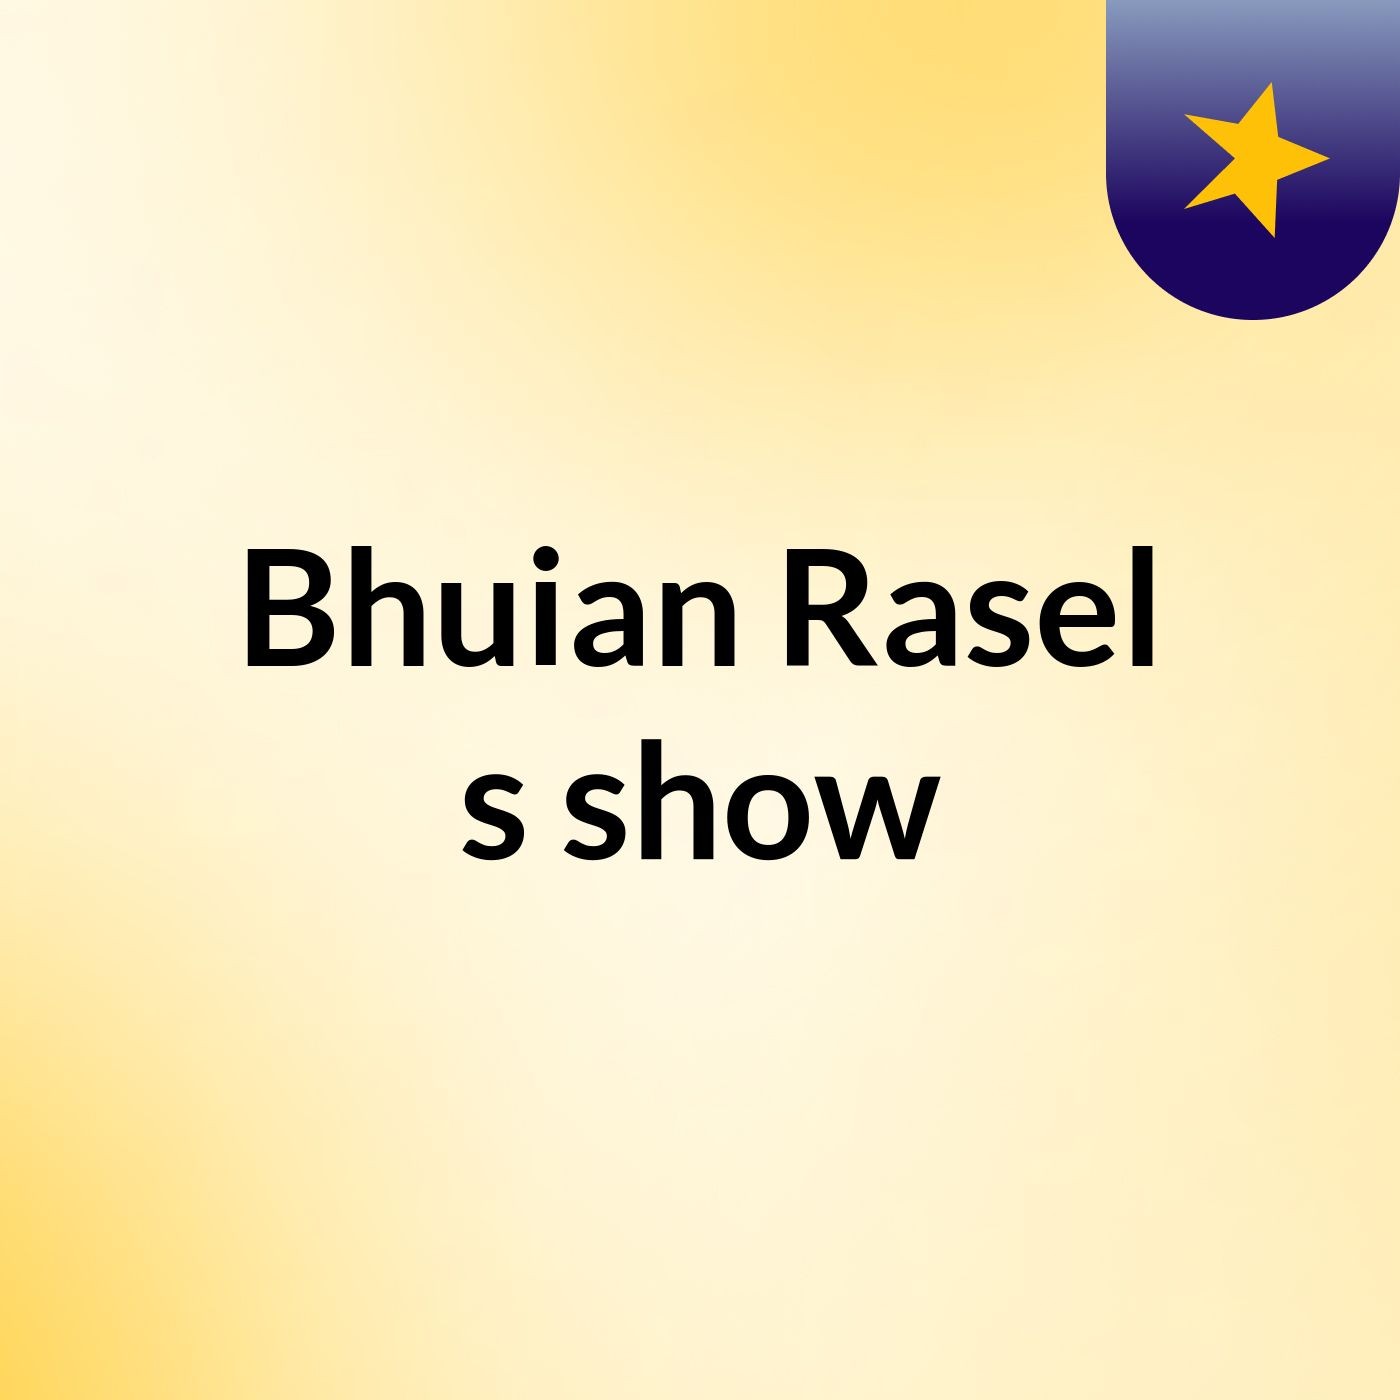 Bhuian Rasel's show